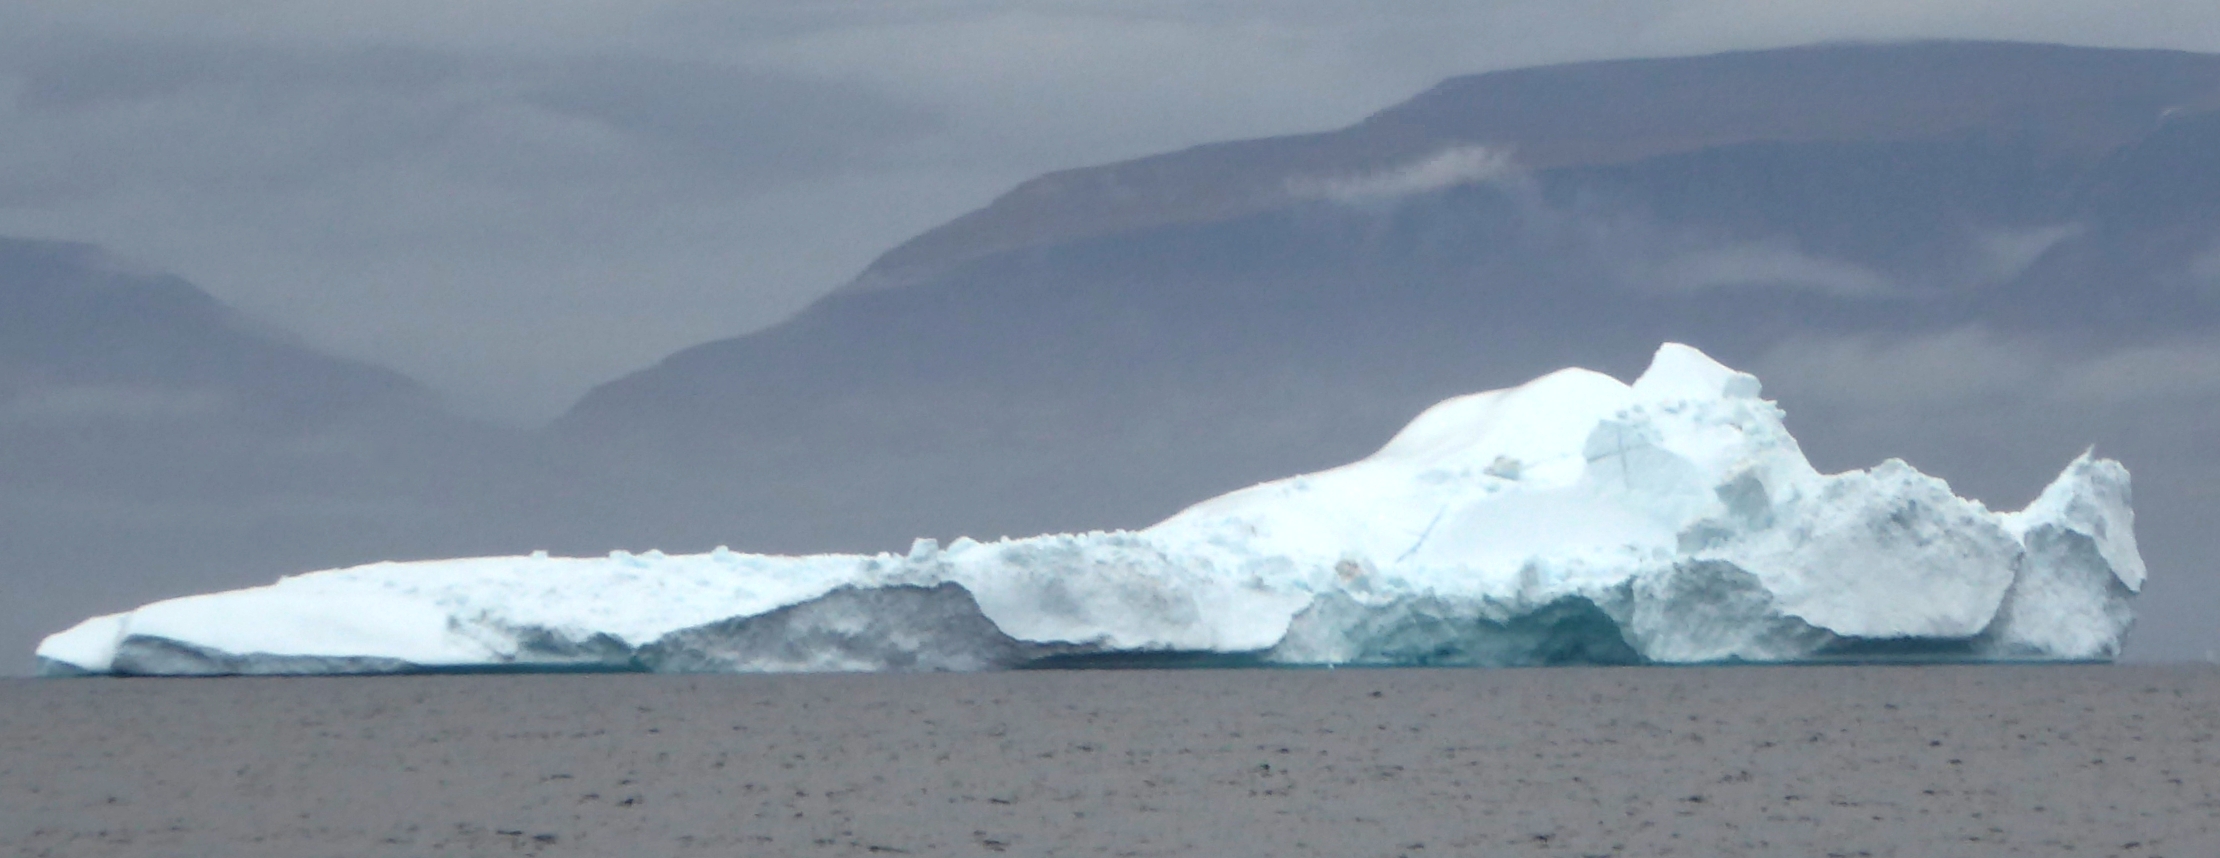 rohrmann-Icebergs-GV084